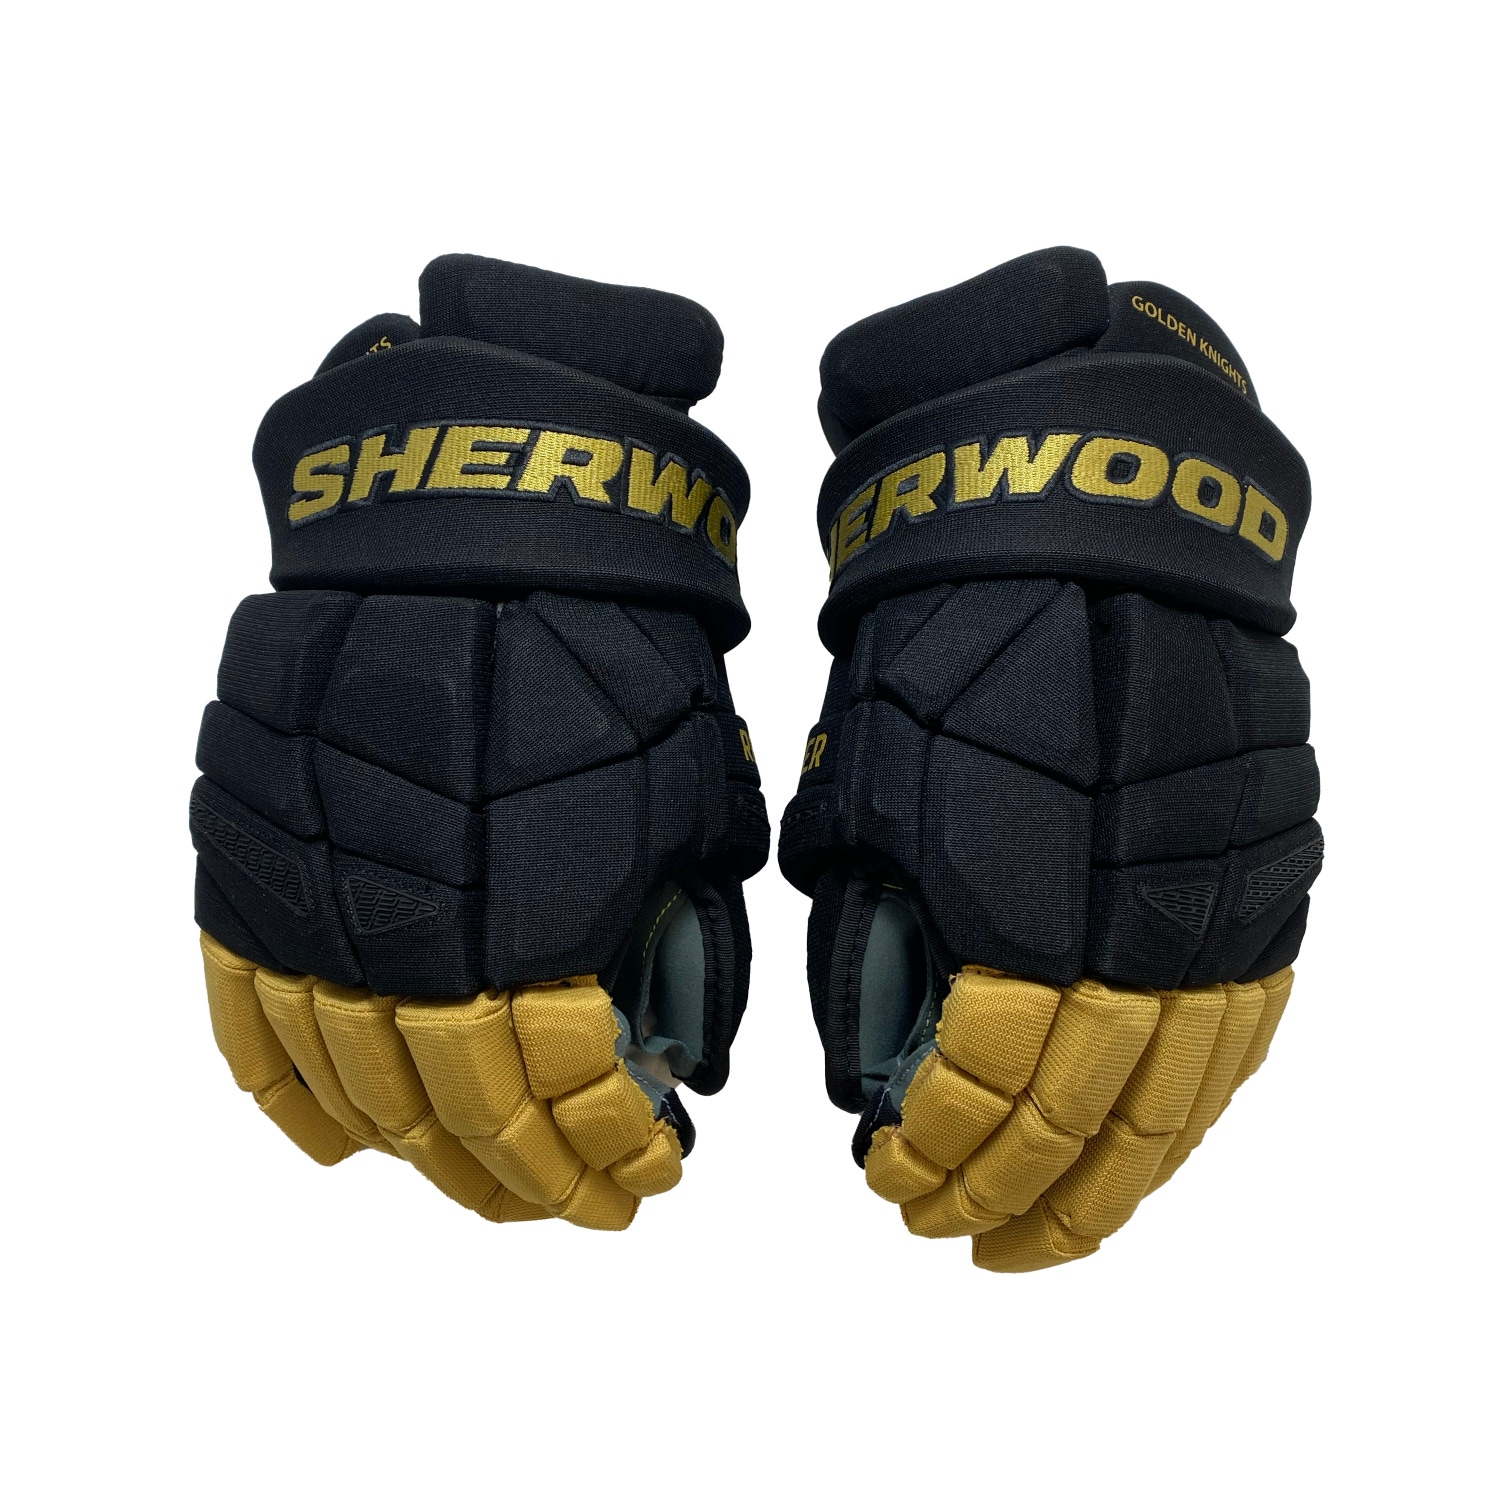 Sherwood Rekker Legend One Pro - Pro Stock Gloves - Las Vegas Golden Knights (Home)